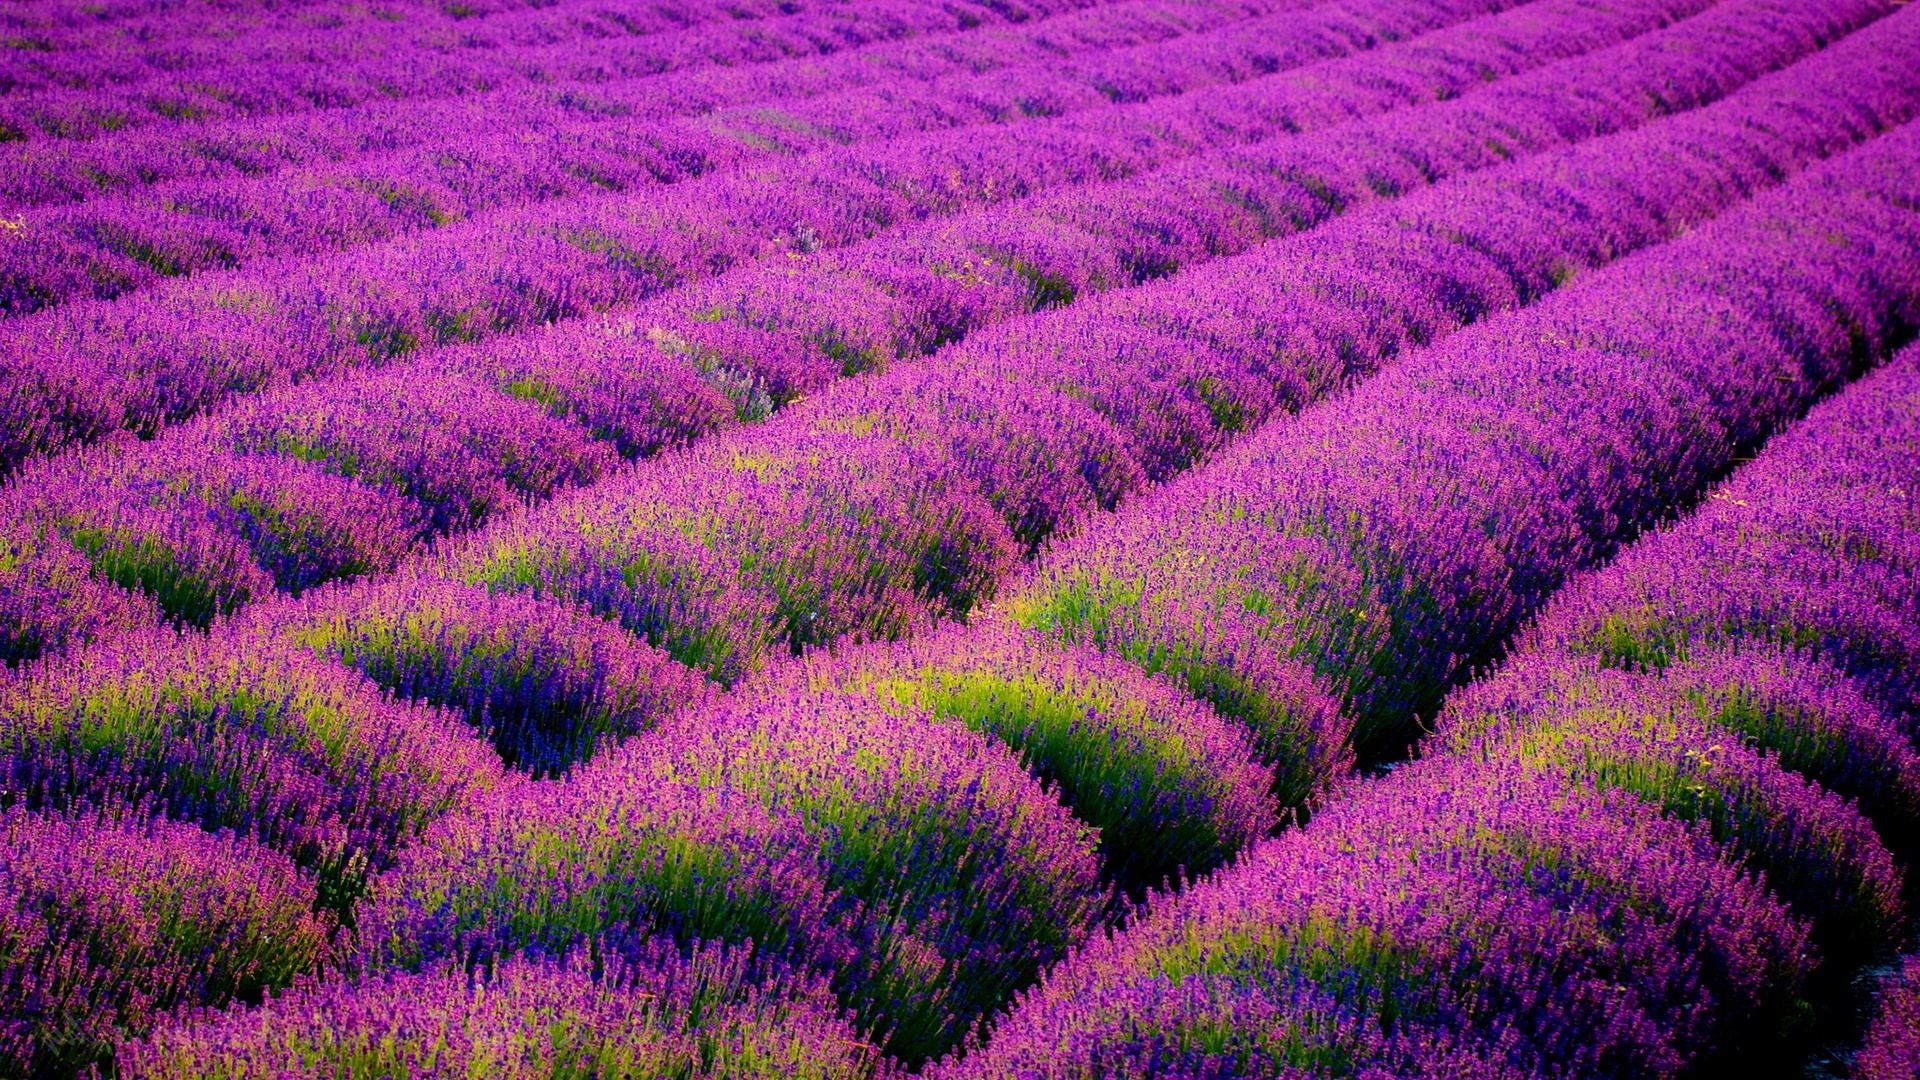 Lavender fields desktop wallpaper, Nature's tapestry, Serene landscapes, Blooming beauty, 1920x1080 Full HD Desktop